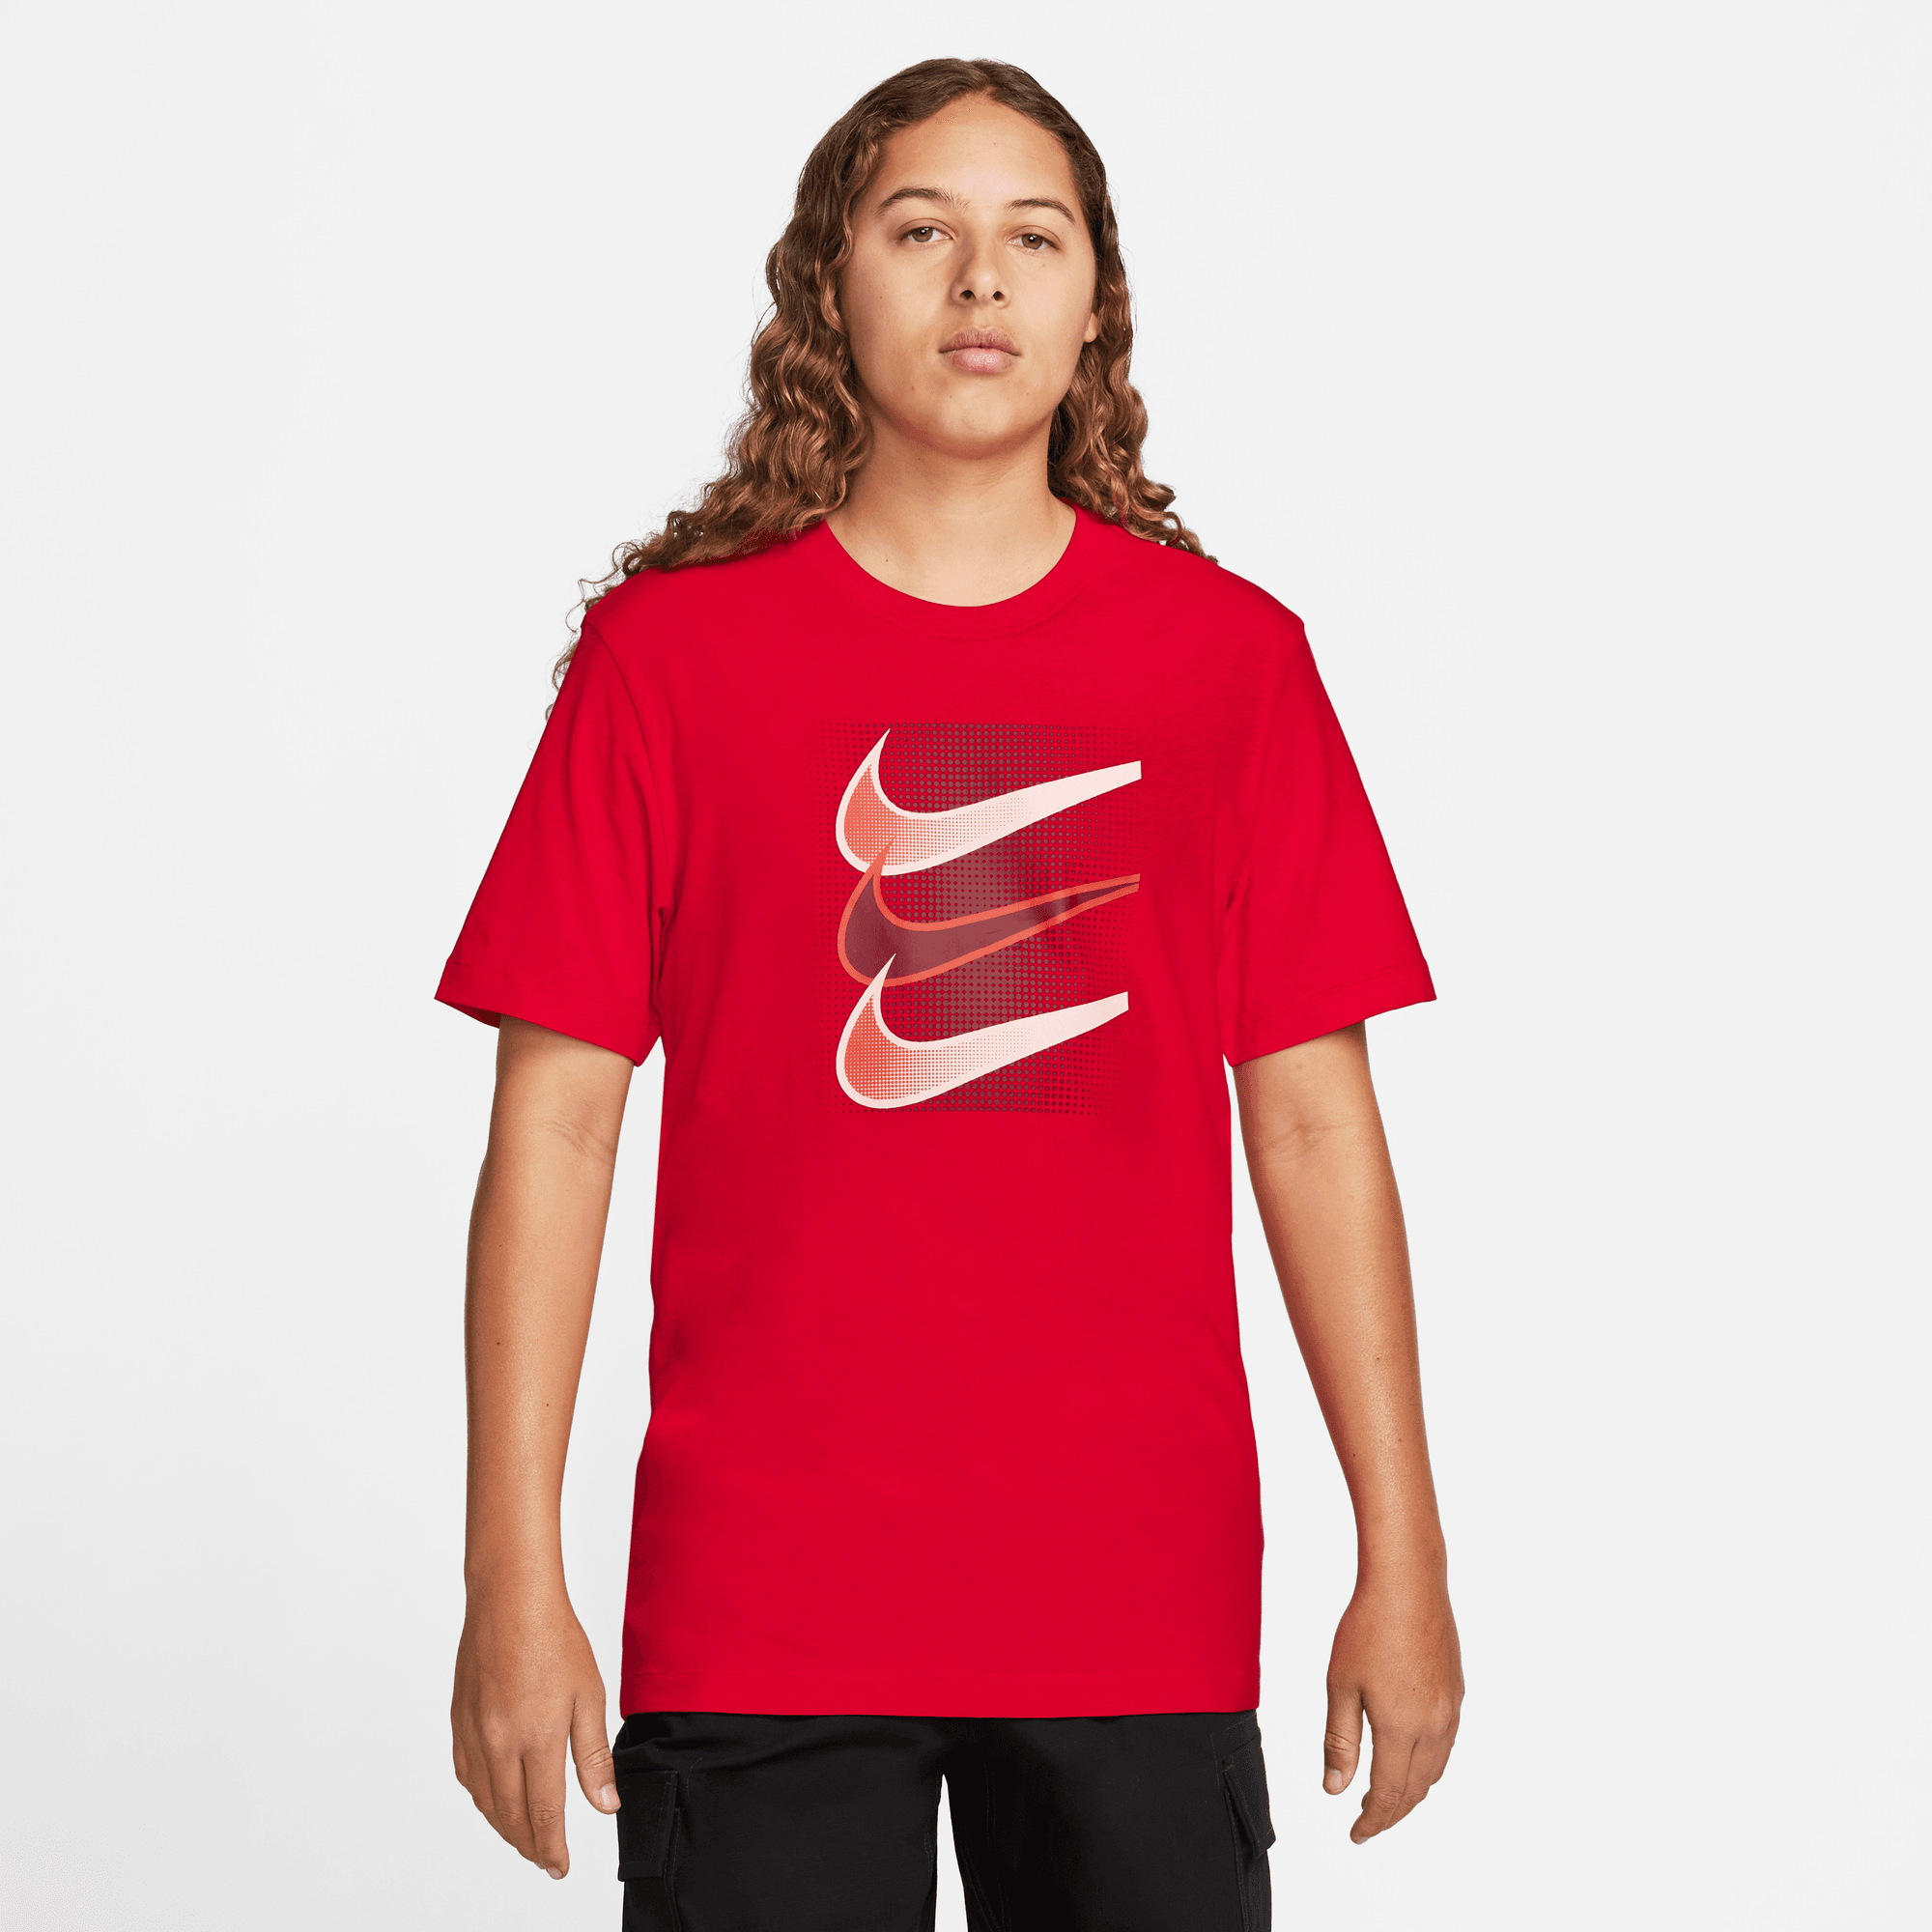 Seaboard element ulækkert Nike - Men - Triple Swoosh Tee - University Red - Nohble